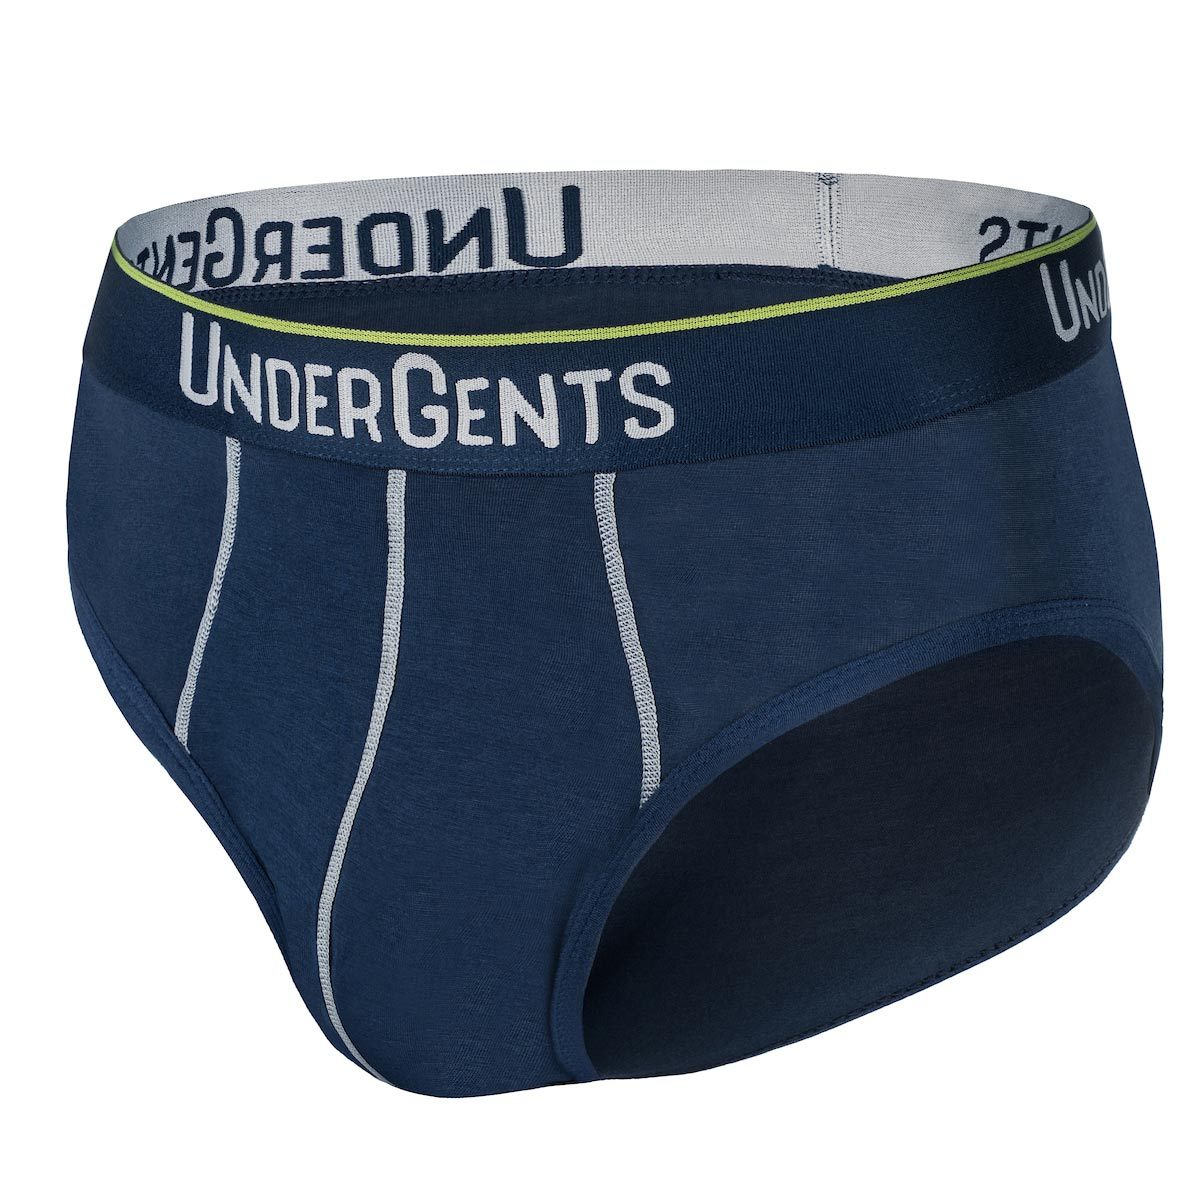 Soft big mens underwear 3xl For Comfort 